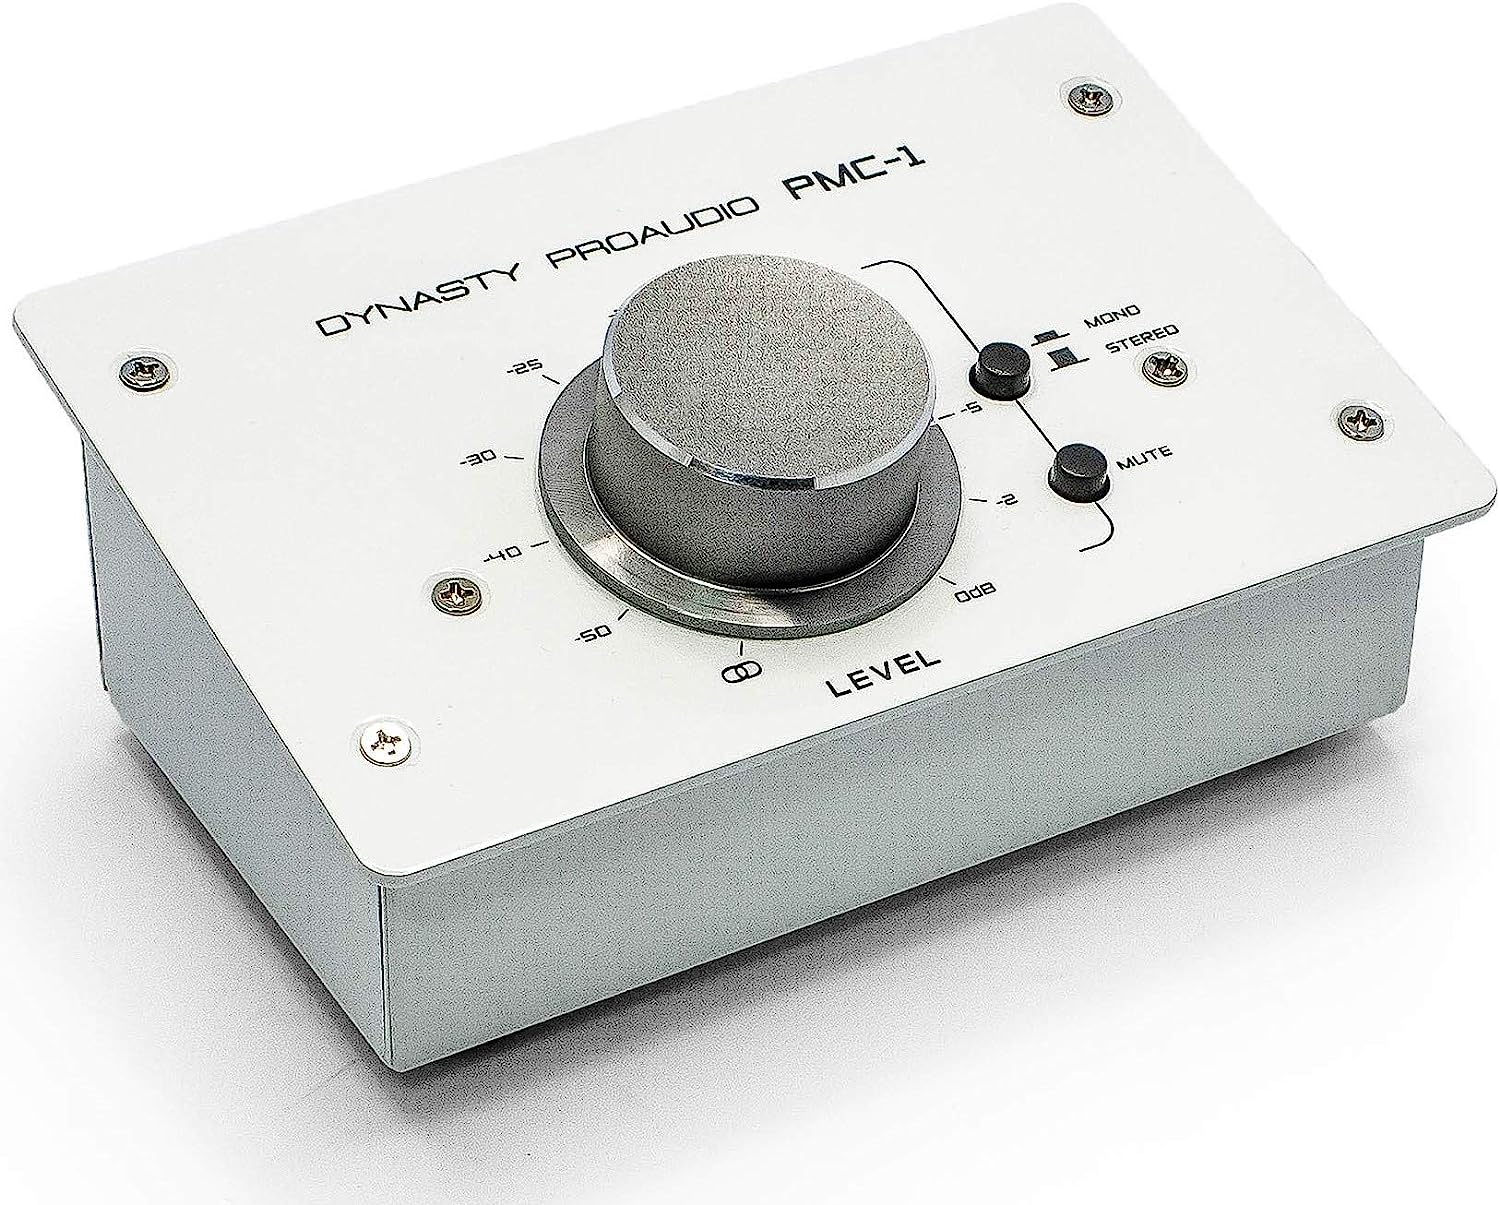 DYNASTY PROAUDIO PMC-1 Premium Passive Stereo Monitor [...]